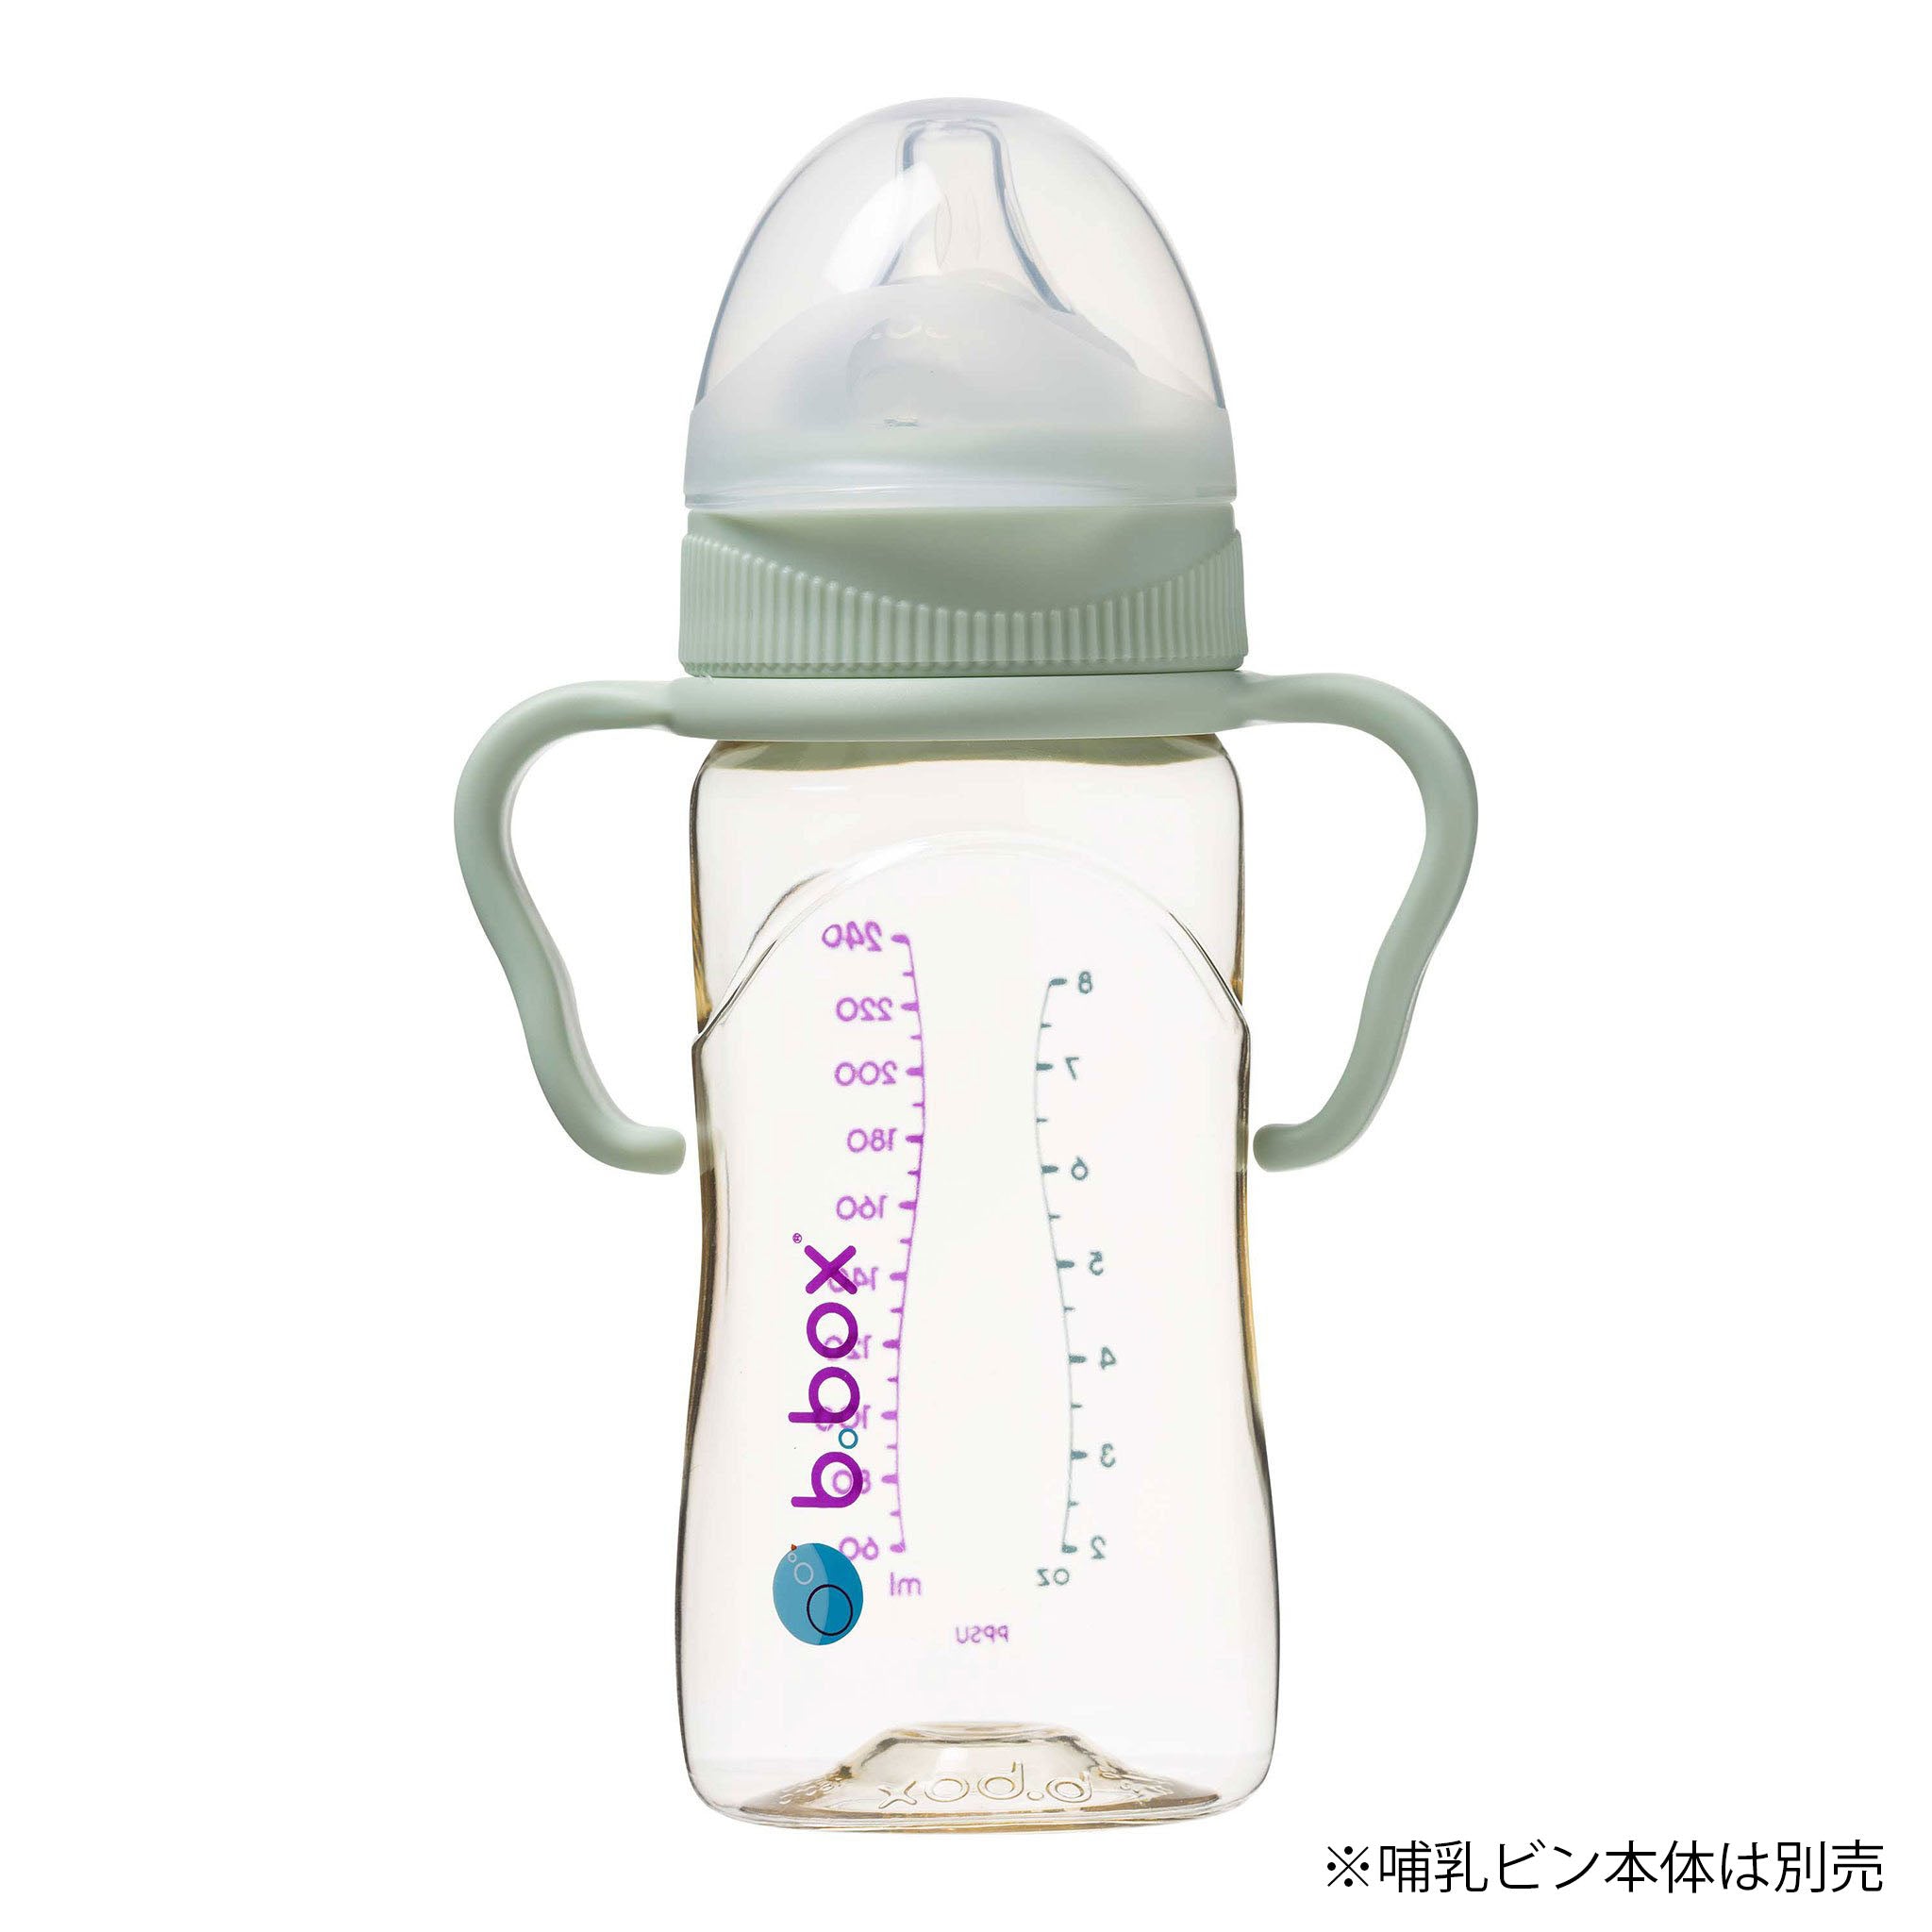 b.box* PPSU Baby Bottle Handles ベビーボトル(哺乳瓶)専用ハンドル 